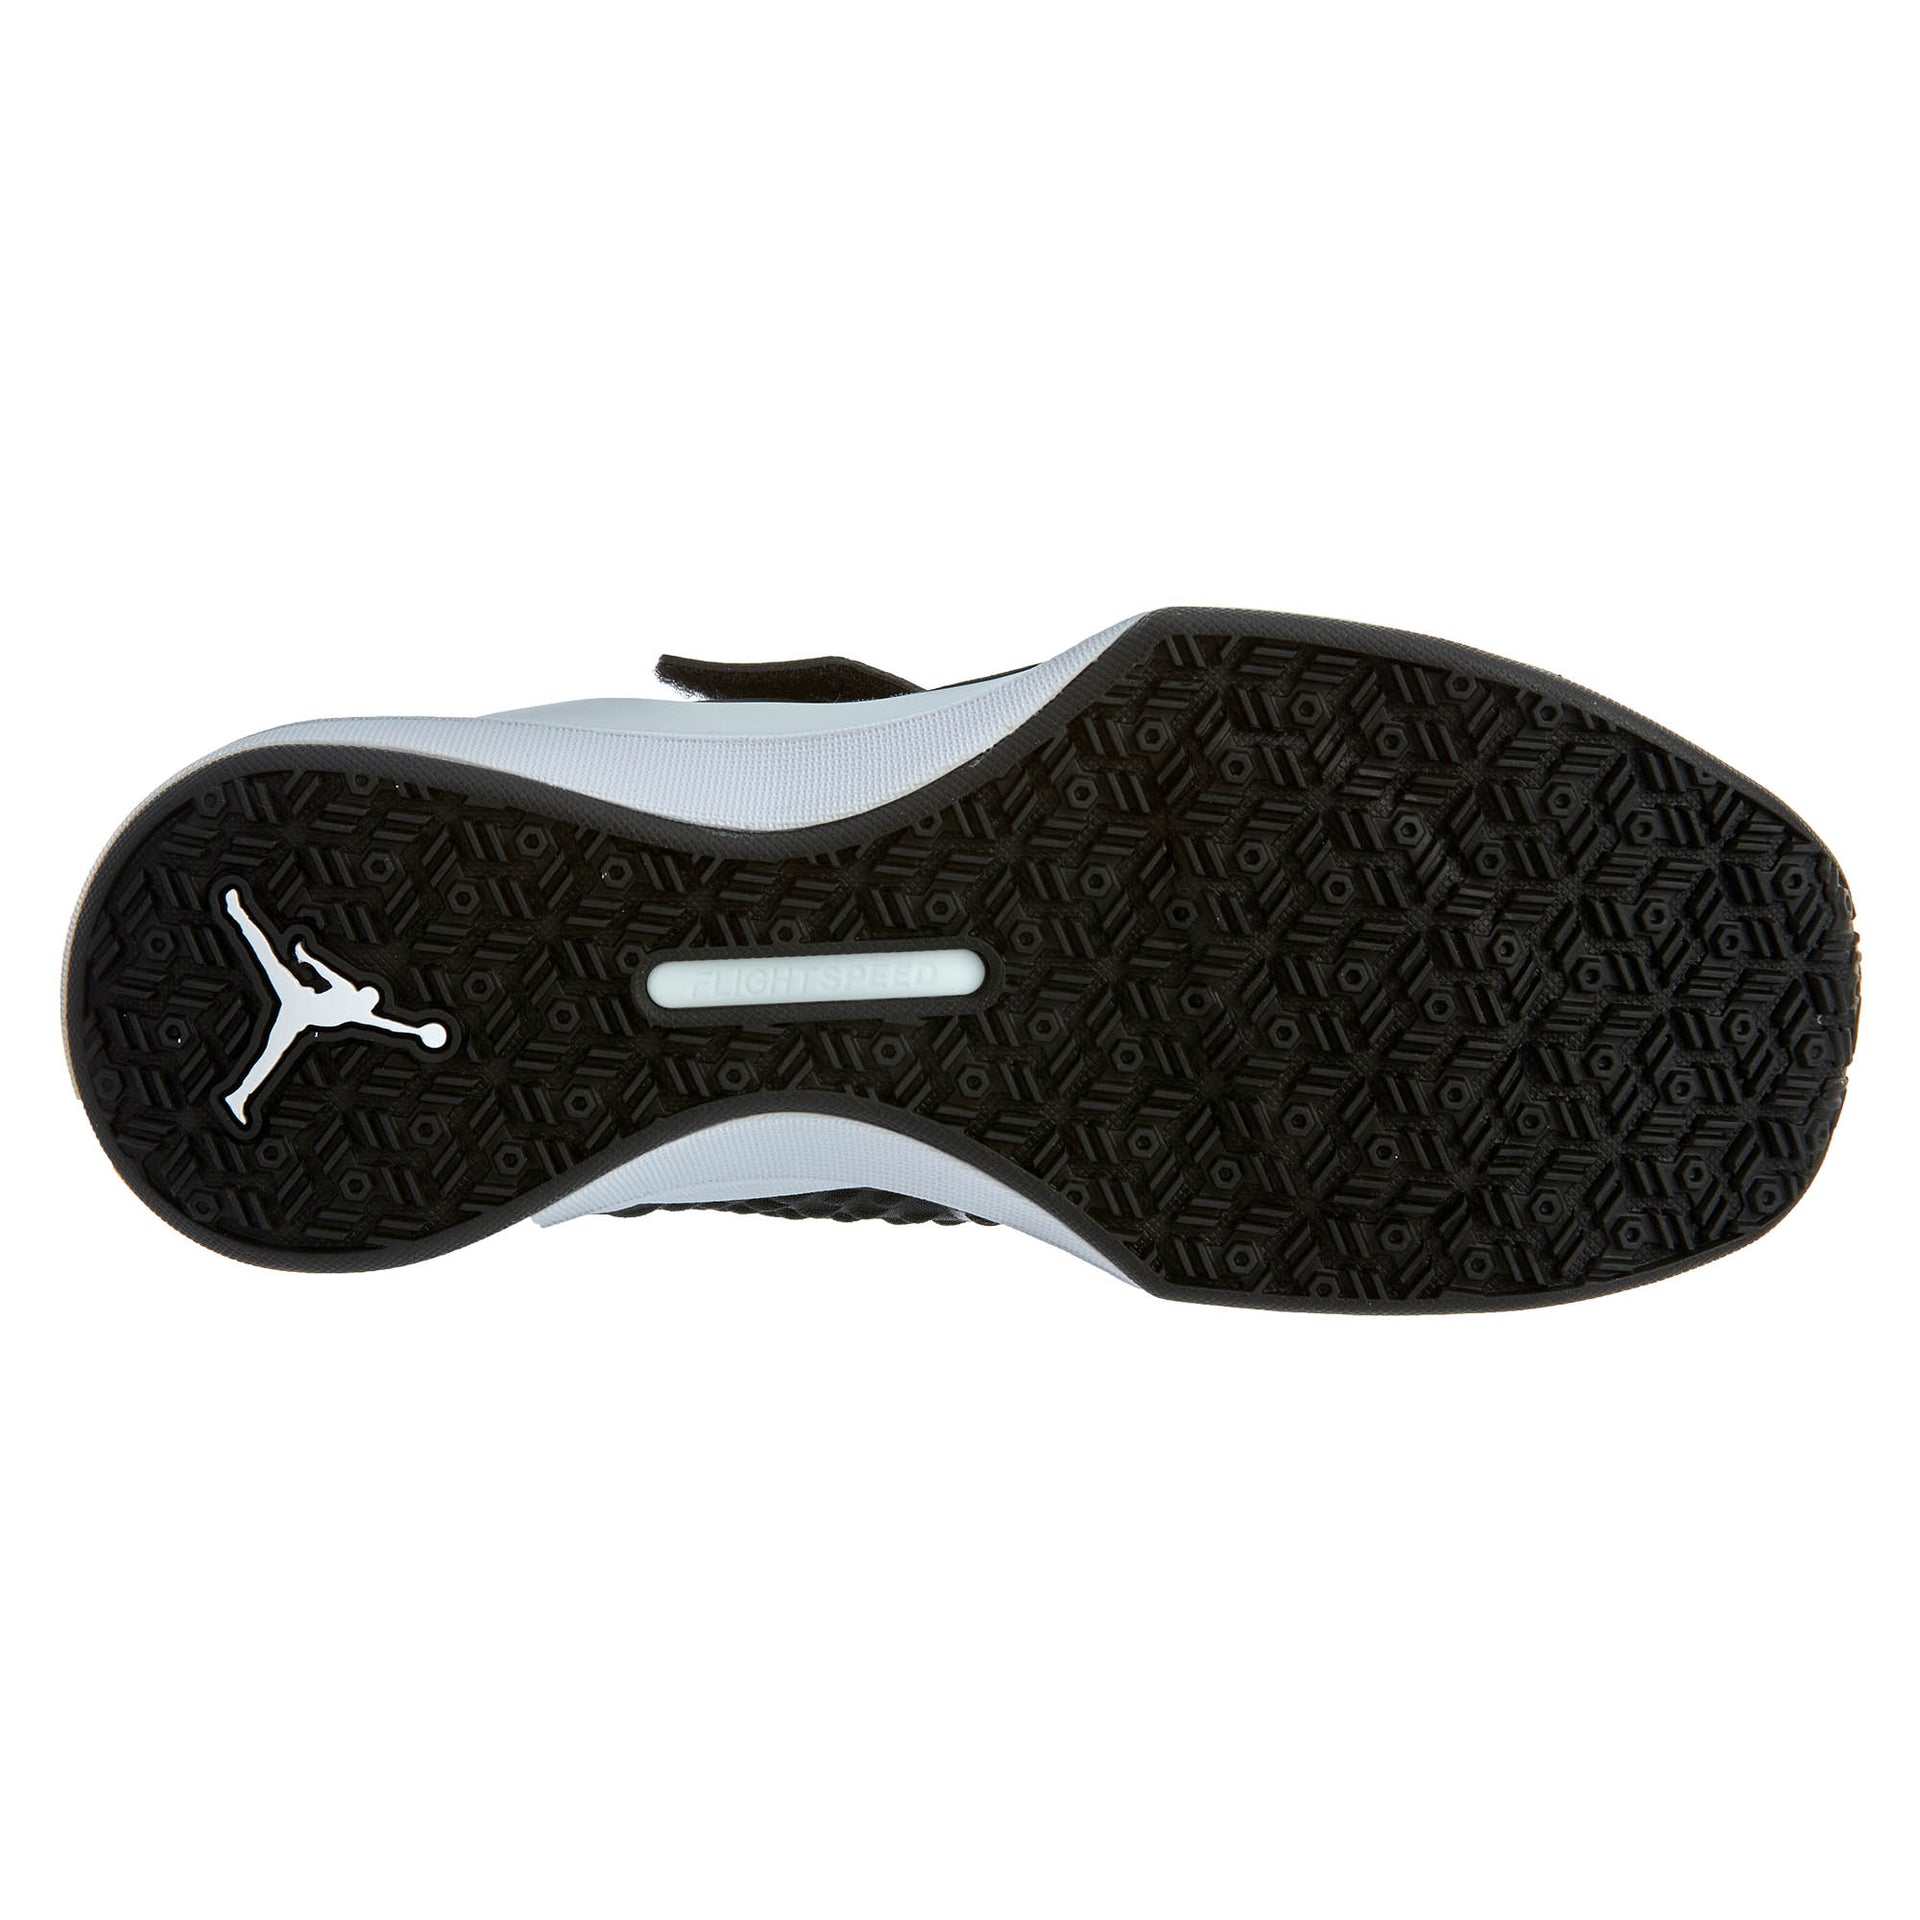 Nike Jordan Trainer 3 Basketball Shoes Mens Style :AJ7982